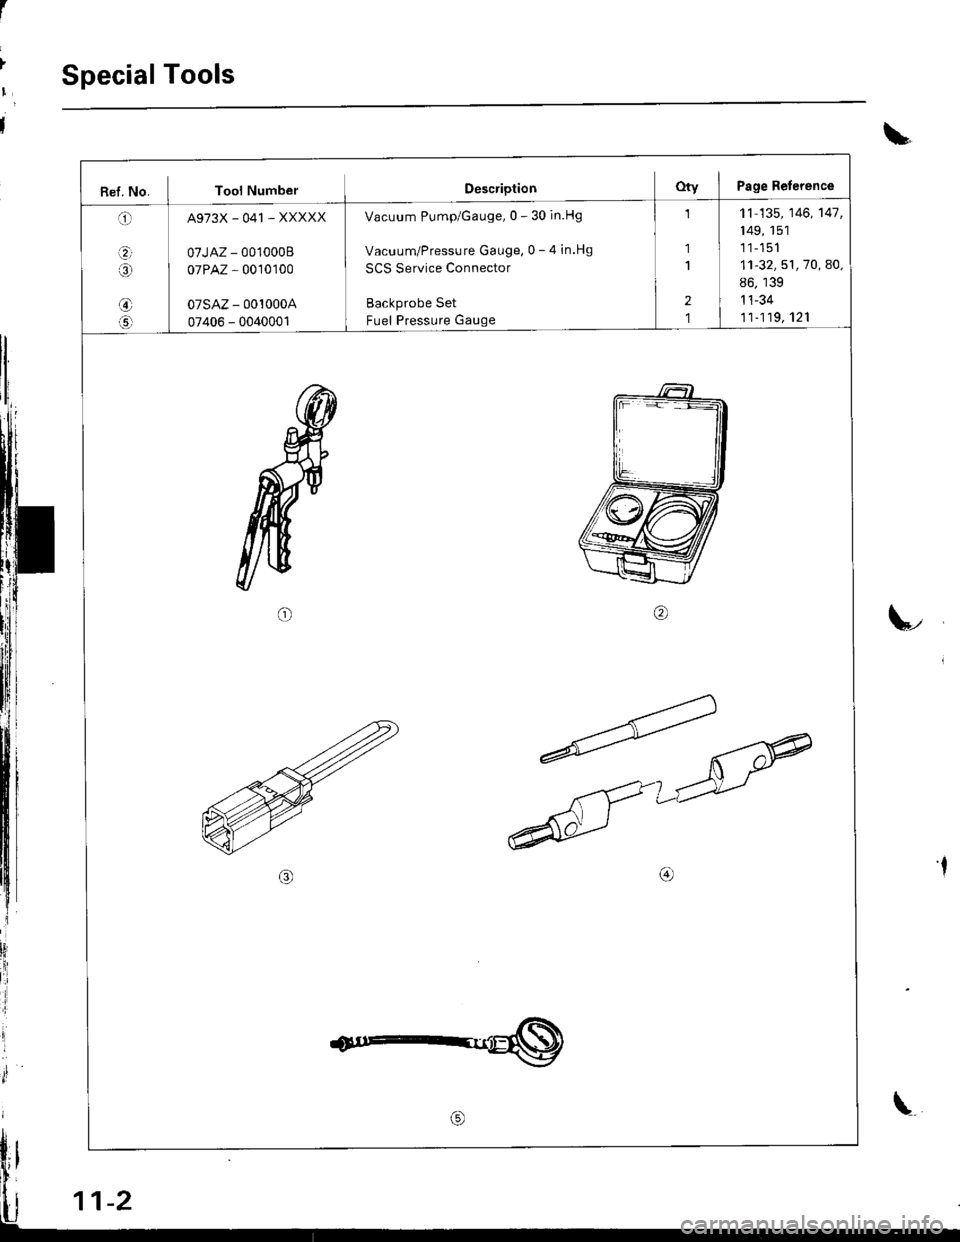 HONDA INTEGRA 1998 4.G Workshop Manual I
l
t
Special Tools
L
Ref. No. Tool NumberDescriptionOty J Page Reference
O A973x - 041 - xxxxx
a 07JAZ - 0010008
i0 
I 
oTPAZ-oo1o1oo
@ oTsAz - ooloooA
O 07406 - oo4oool
Vacuum Pump/Gauge,0 - 30 in.H